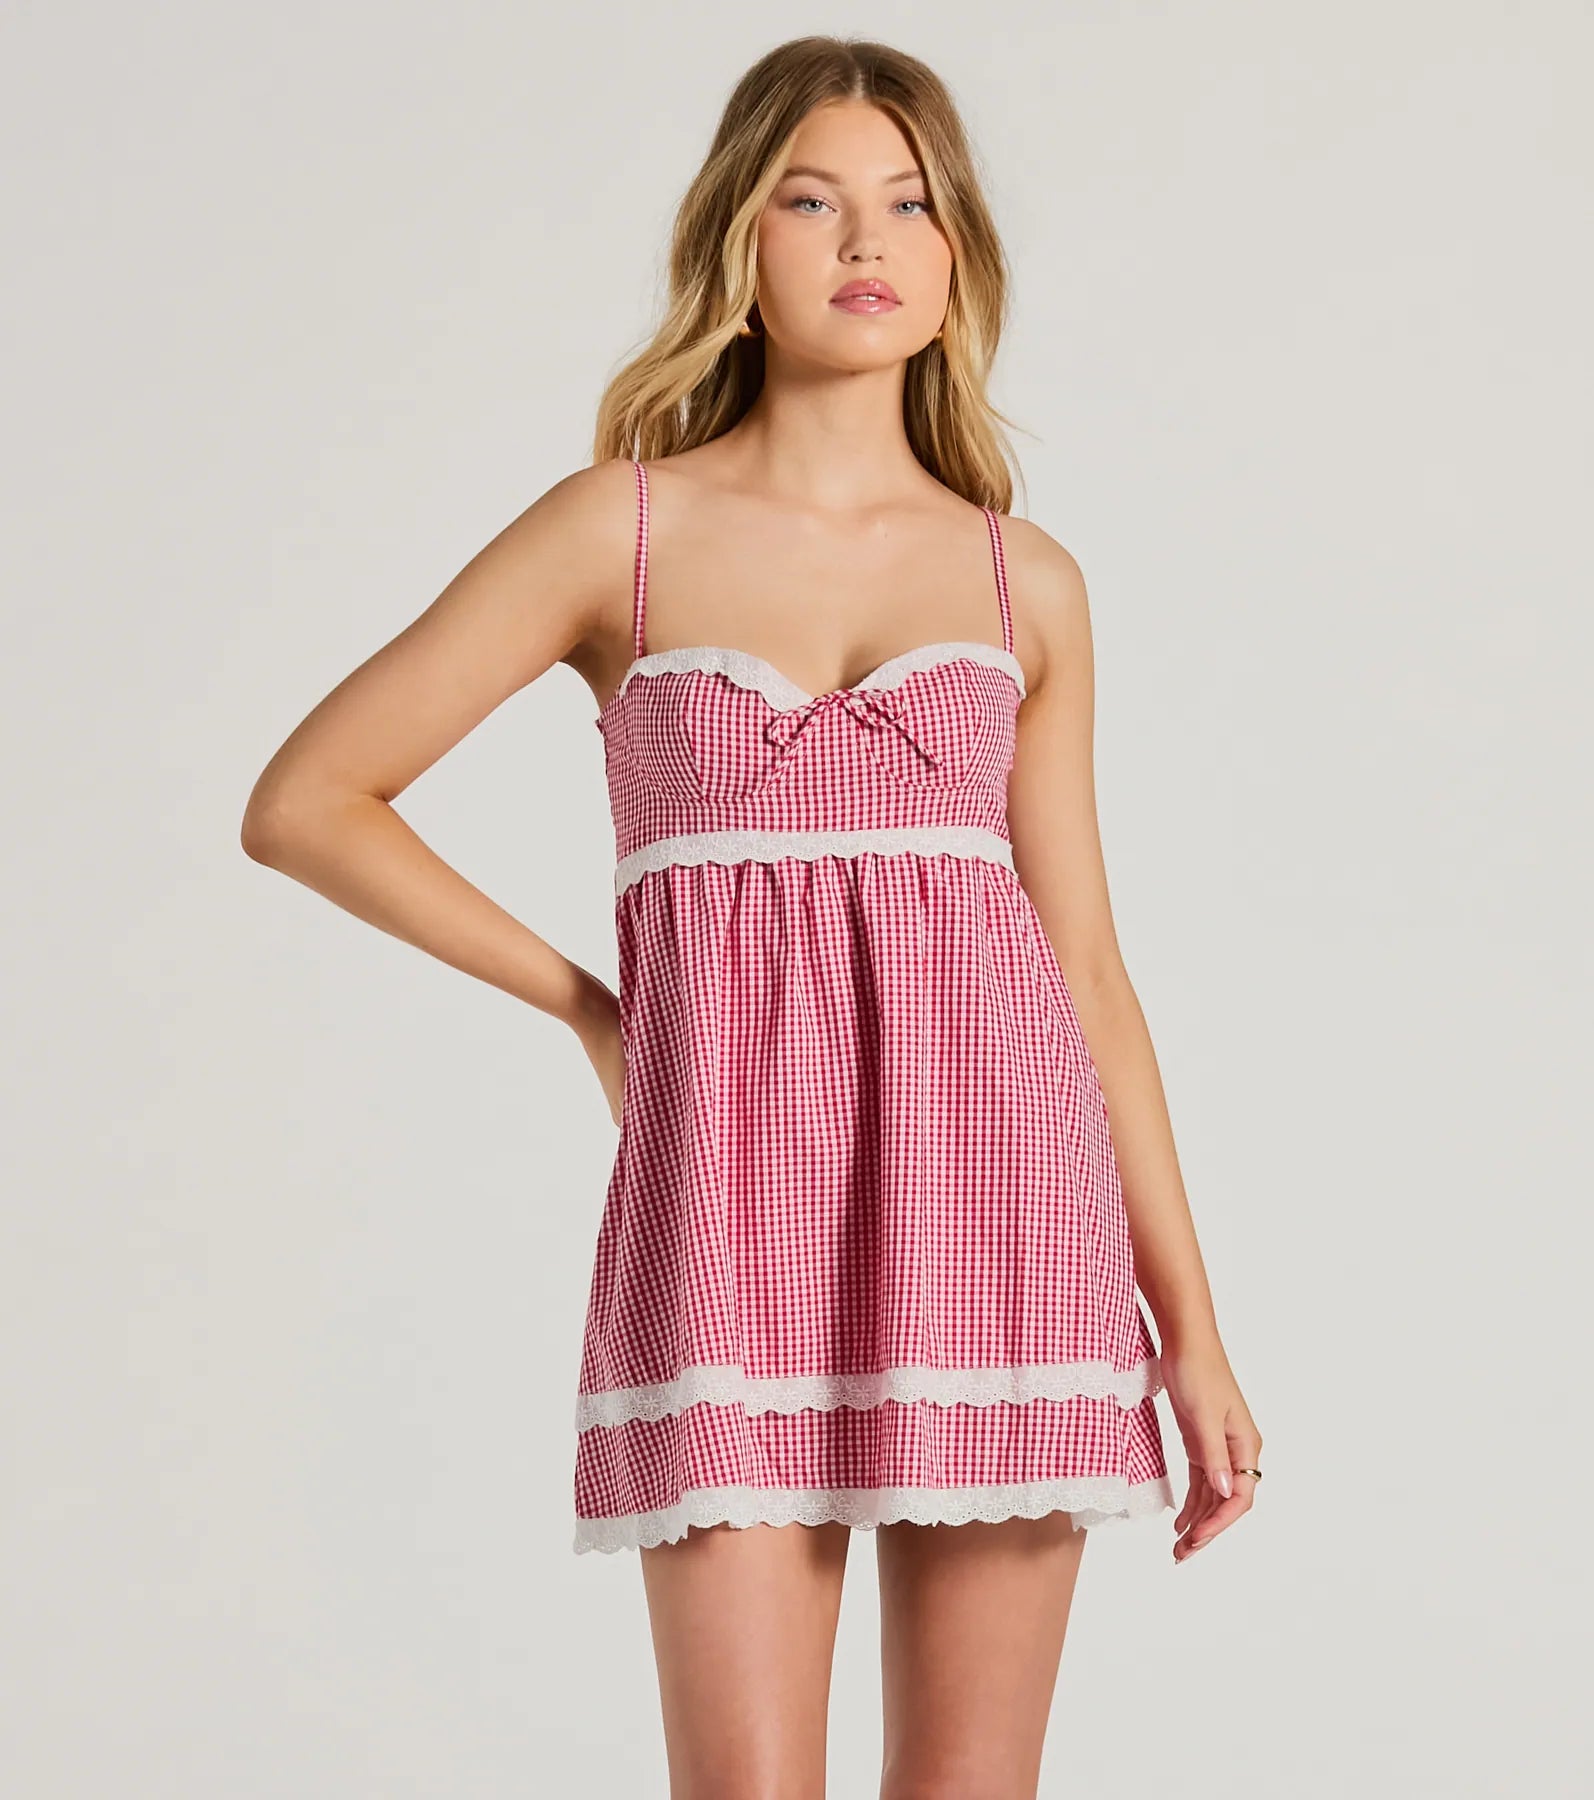 Lace Trim Sweetheart Summer Short Cotton Checkered Gingham Print Spaghetti Strap Dress